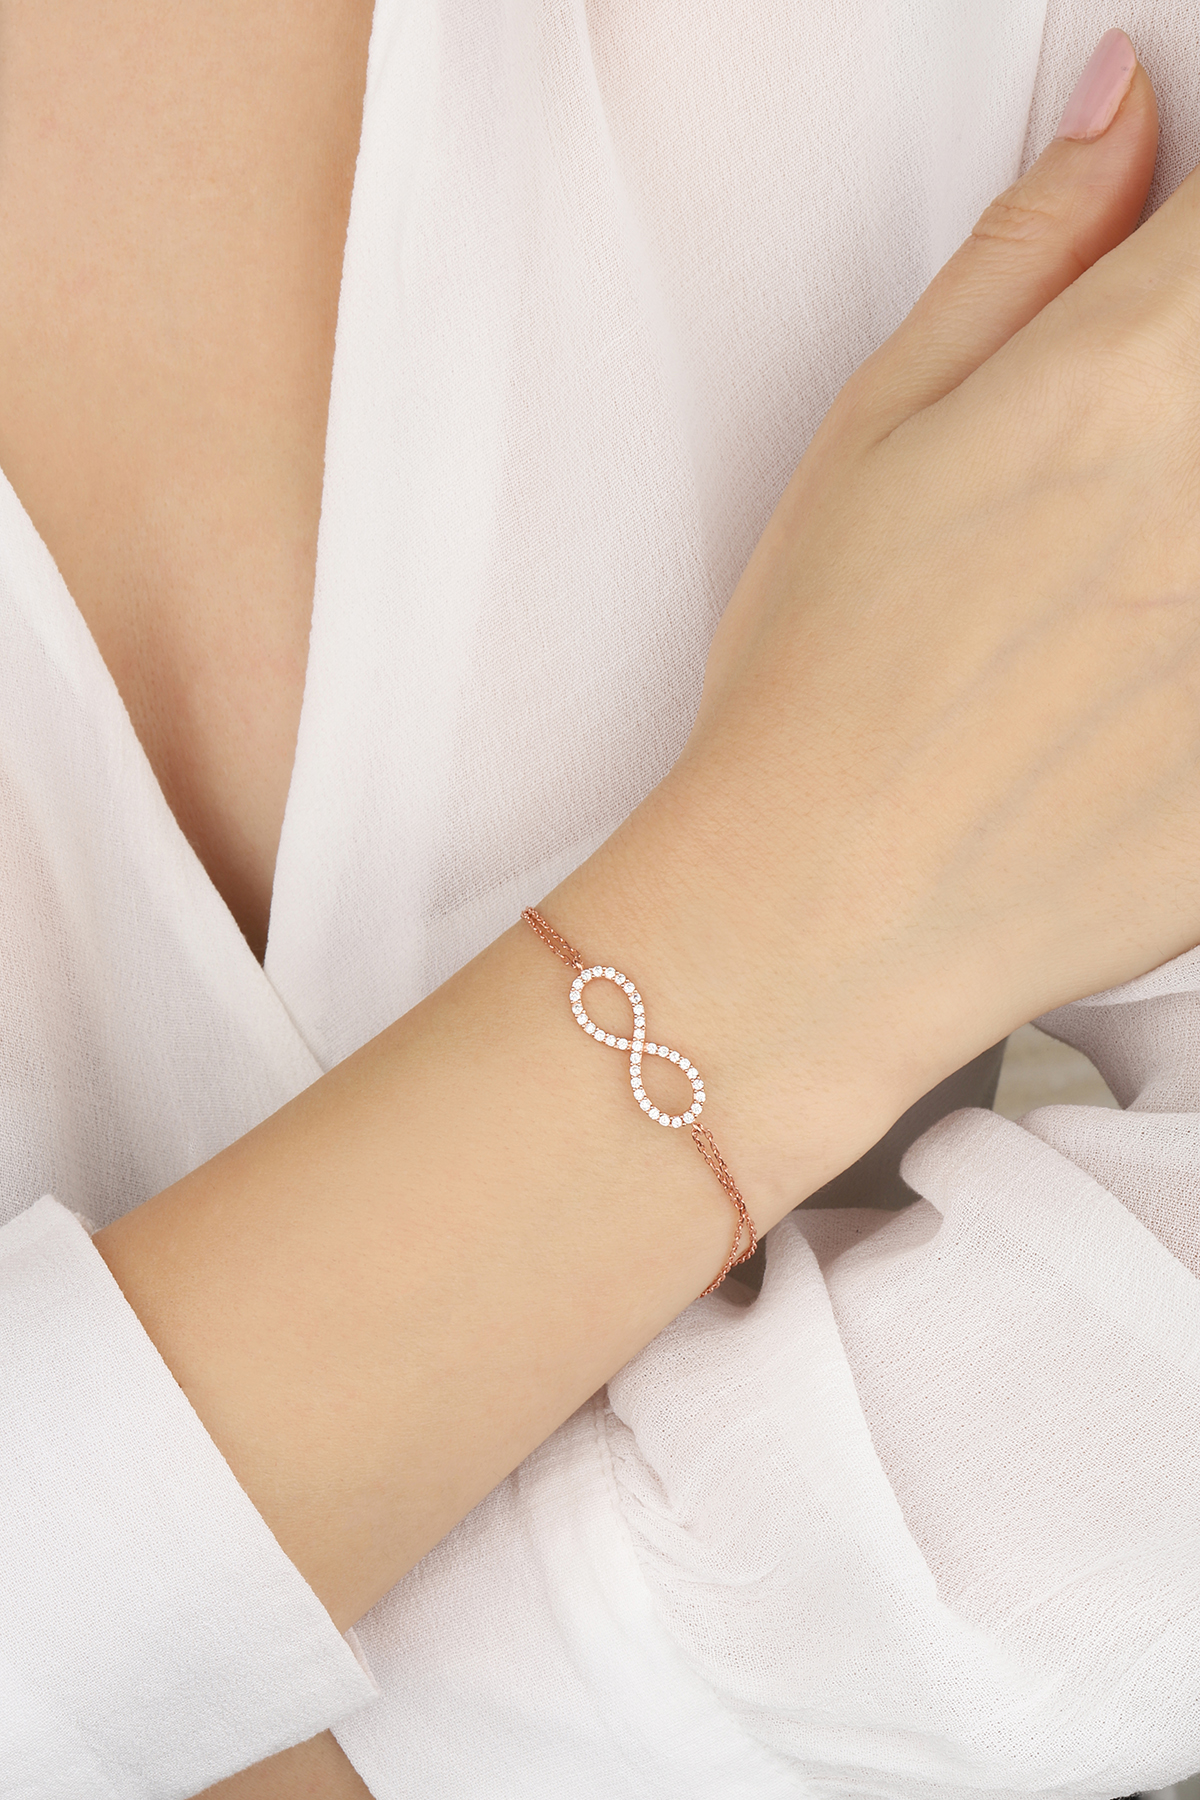 25 pcs infinity charm bracelet wholesale jewelry lot | eBay